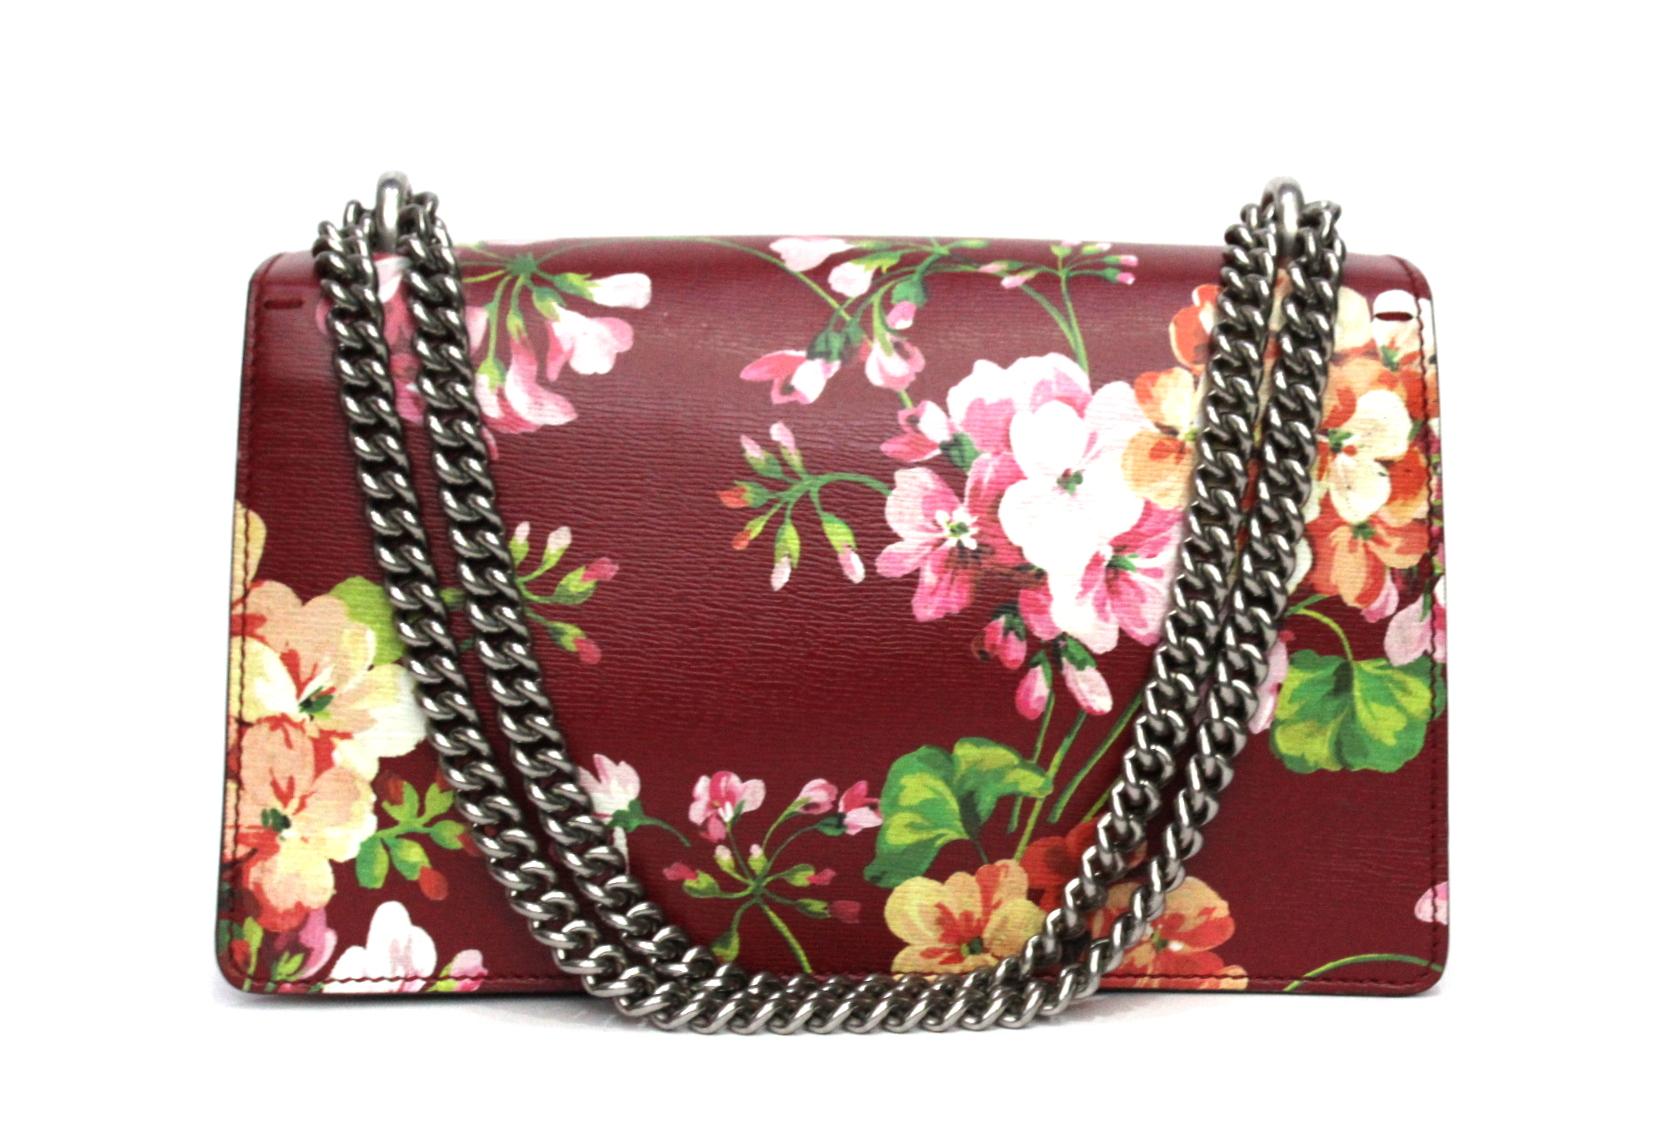 Brown Gucci Dionysus Blooms Cherry Leather Shoulder Bag